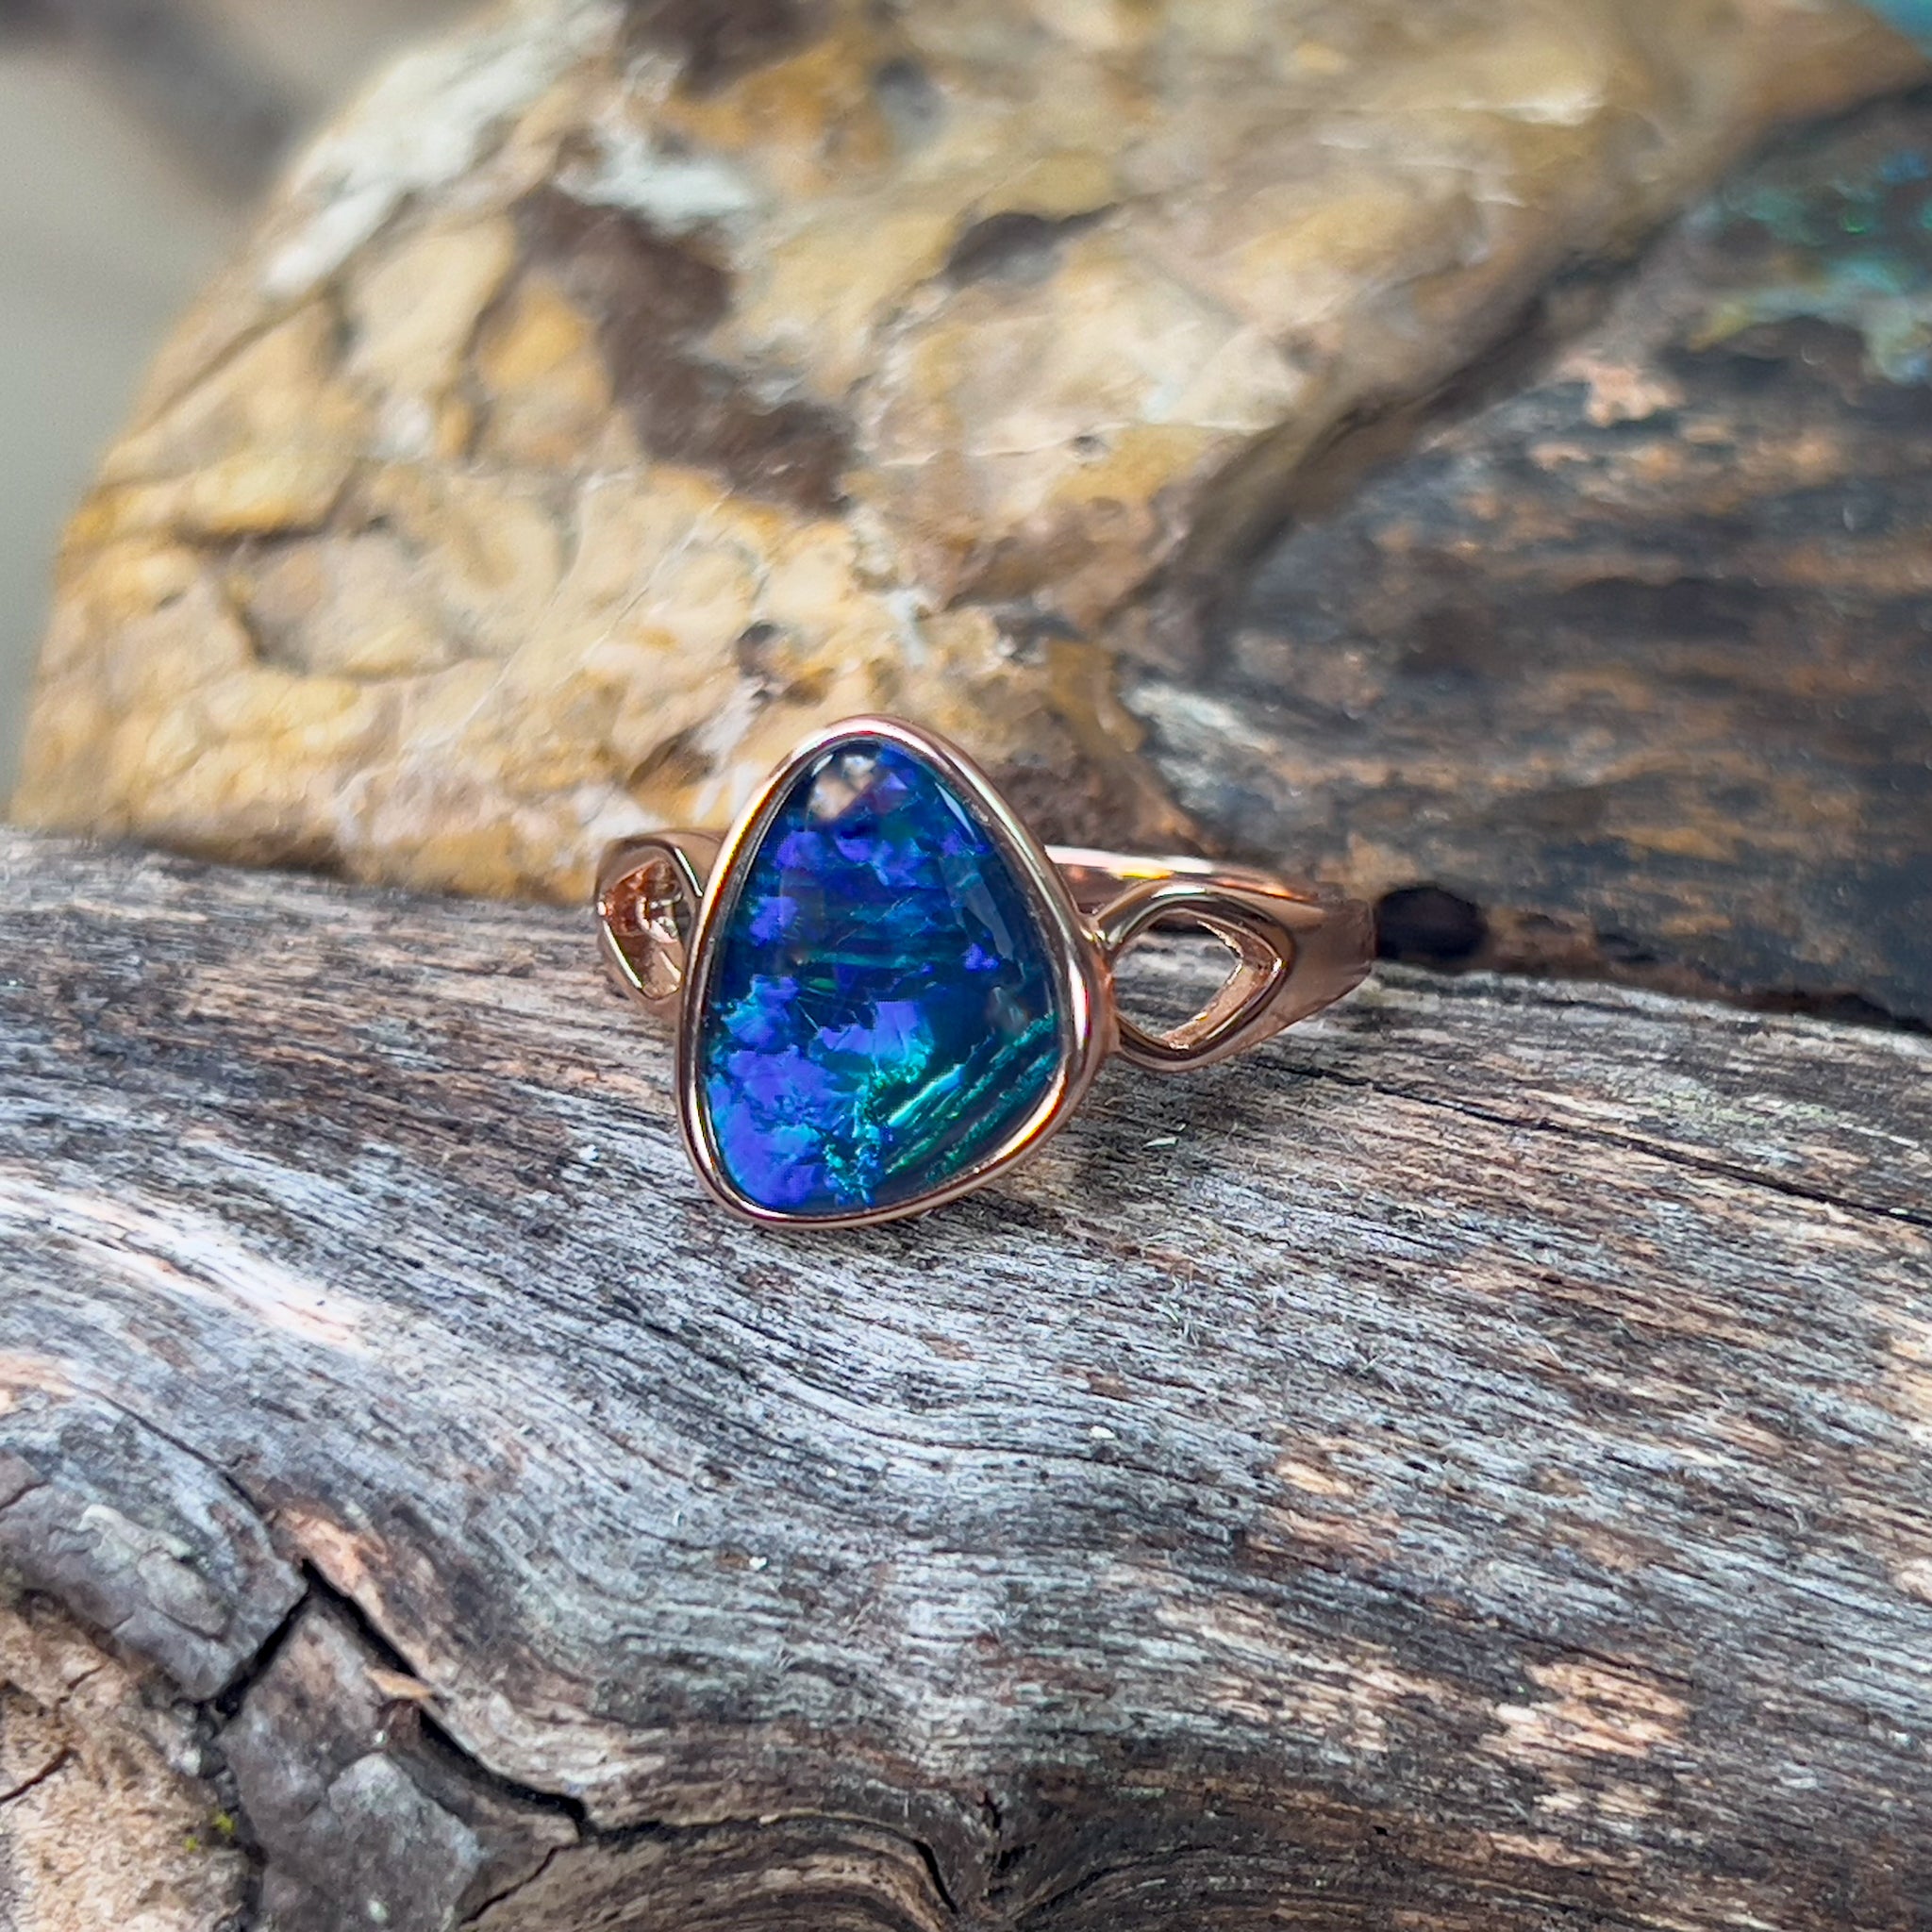 Sterling Silver Rose gold plated Opal triplet freeform shape ring - Masterpiece Jewellery Opal & Gems Sydney Australia | Online Shop